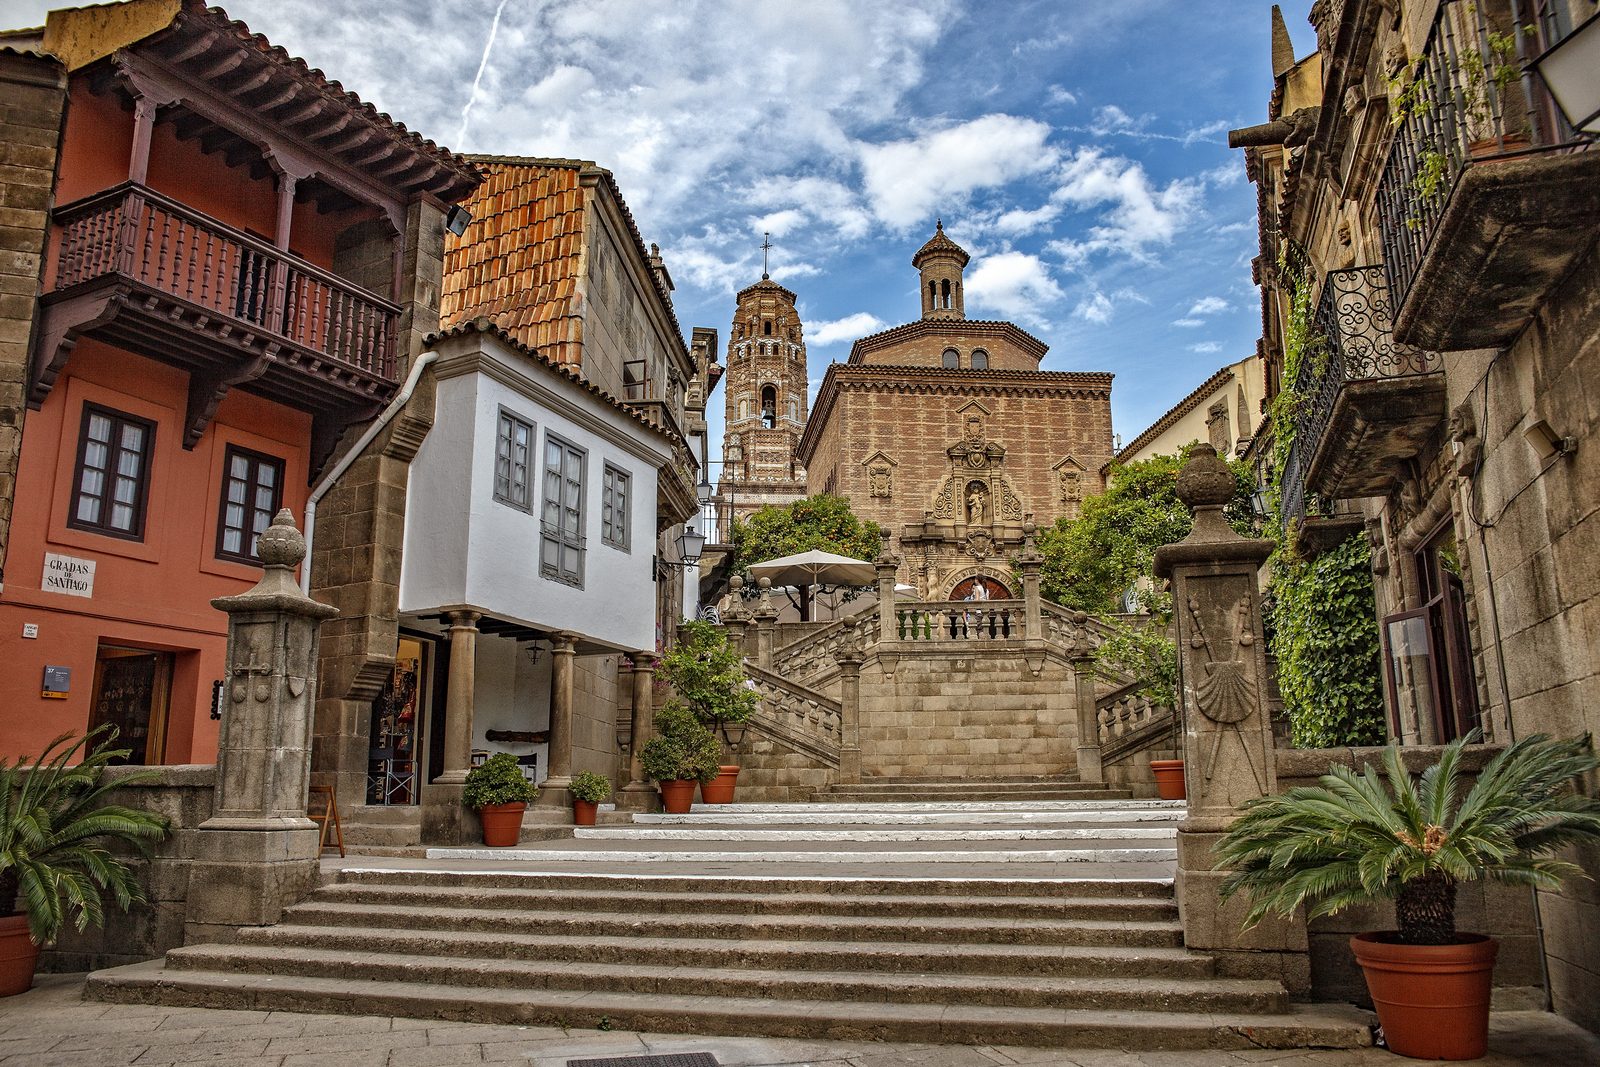 M2 Lux - Spanish Village (Poble Espanyol) in Barcelona.